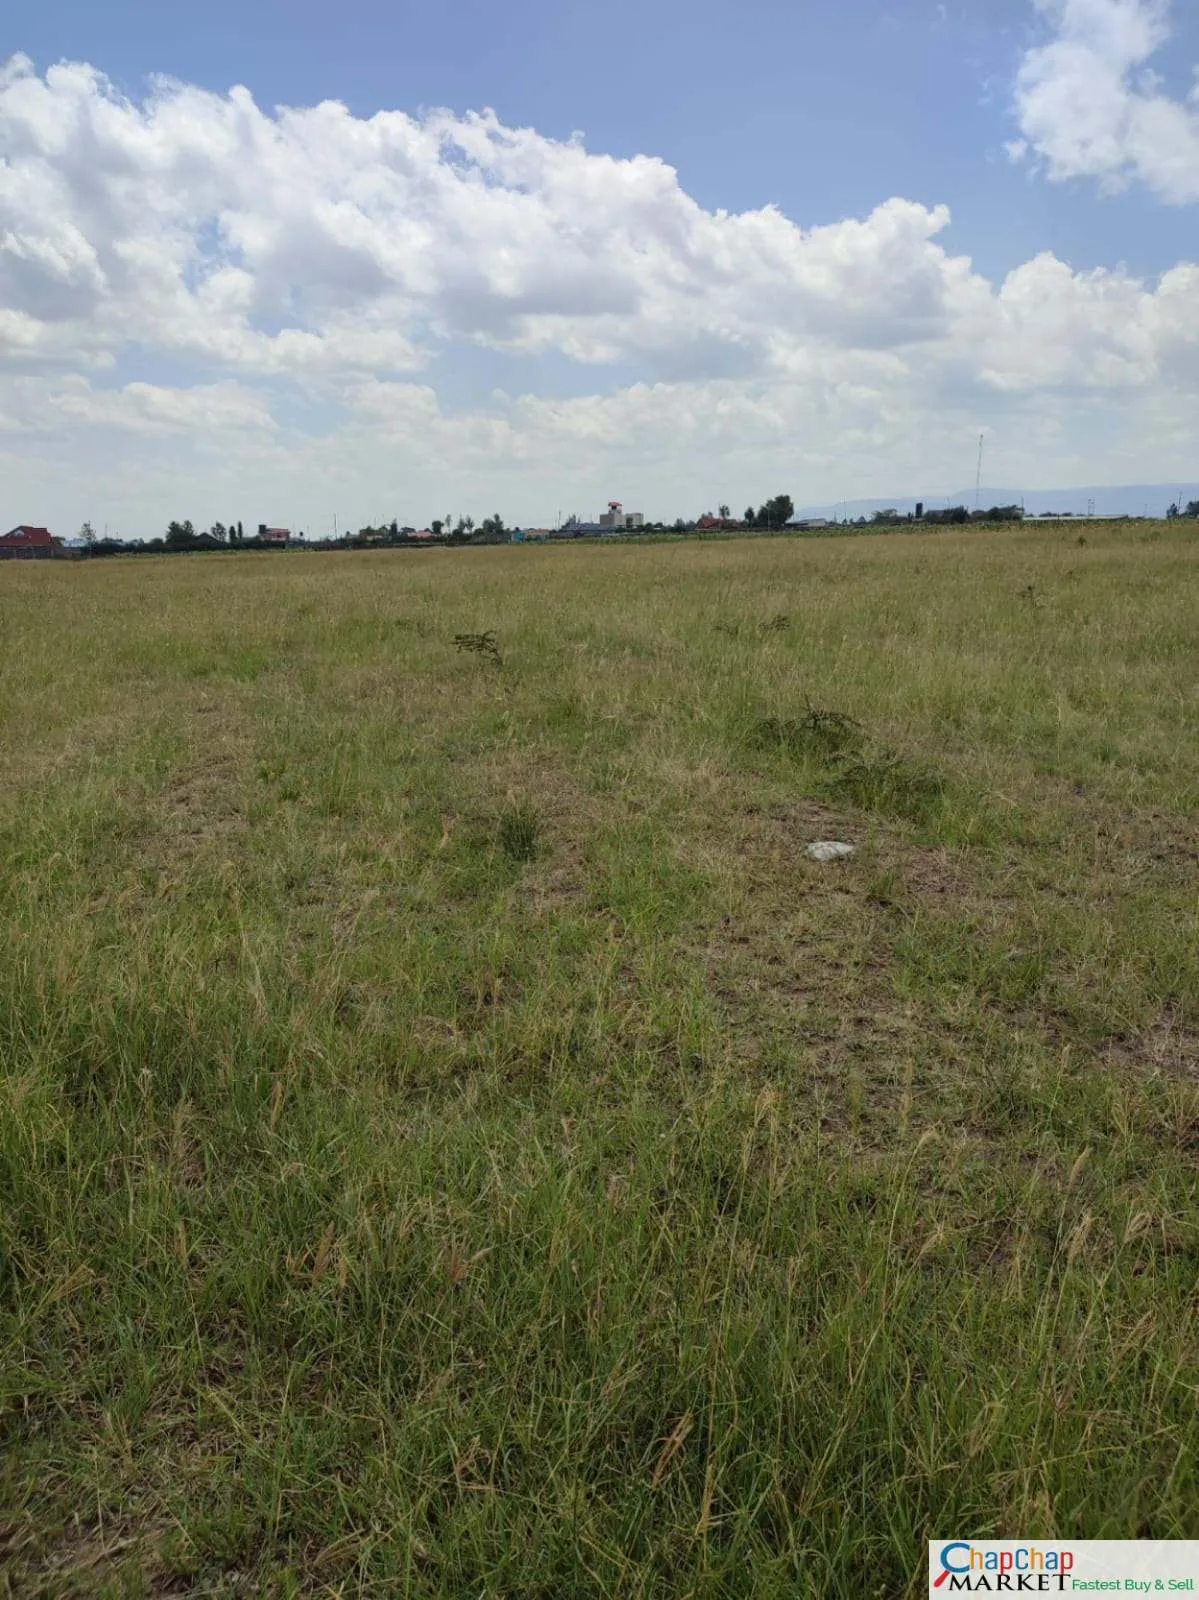 Land for Sale in Nakuru 6 acres for sale Eastgate Nakuru QUICK SALE Clean Title Deed